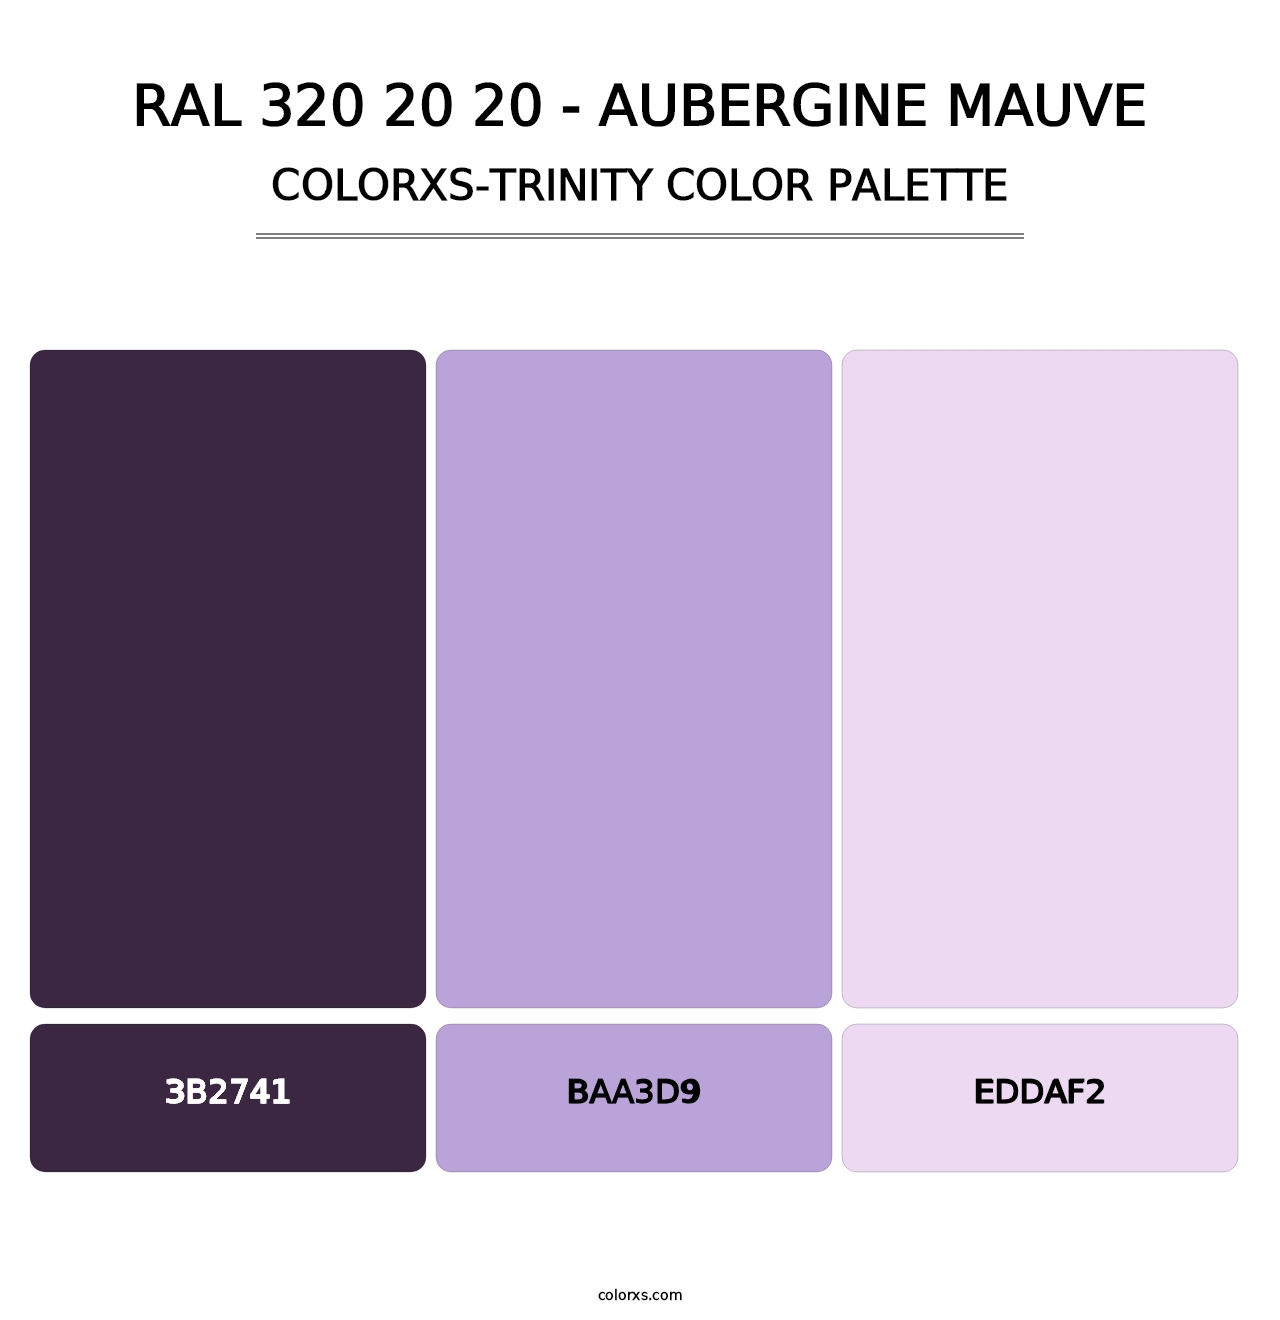 RAL 320 20 20 - Aubergine Mauve - Colorxs Trinity Palette